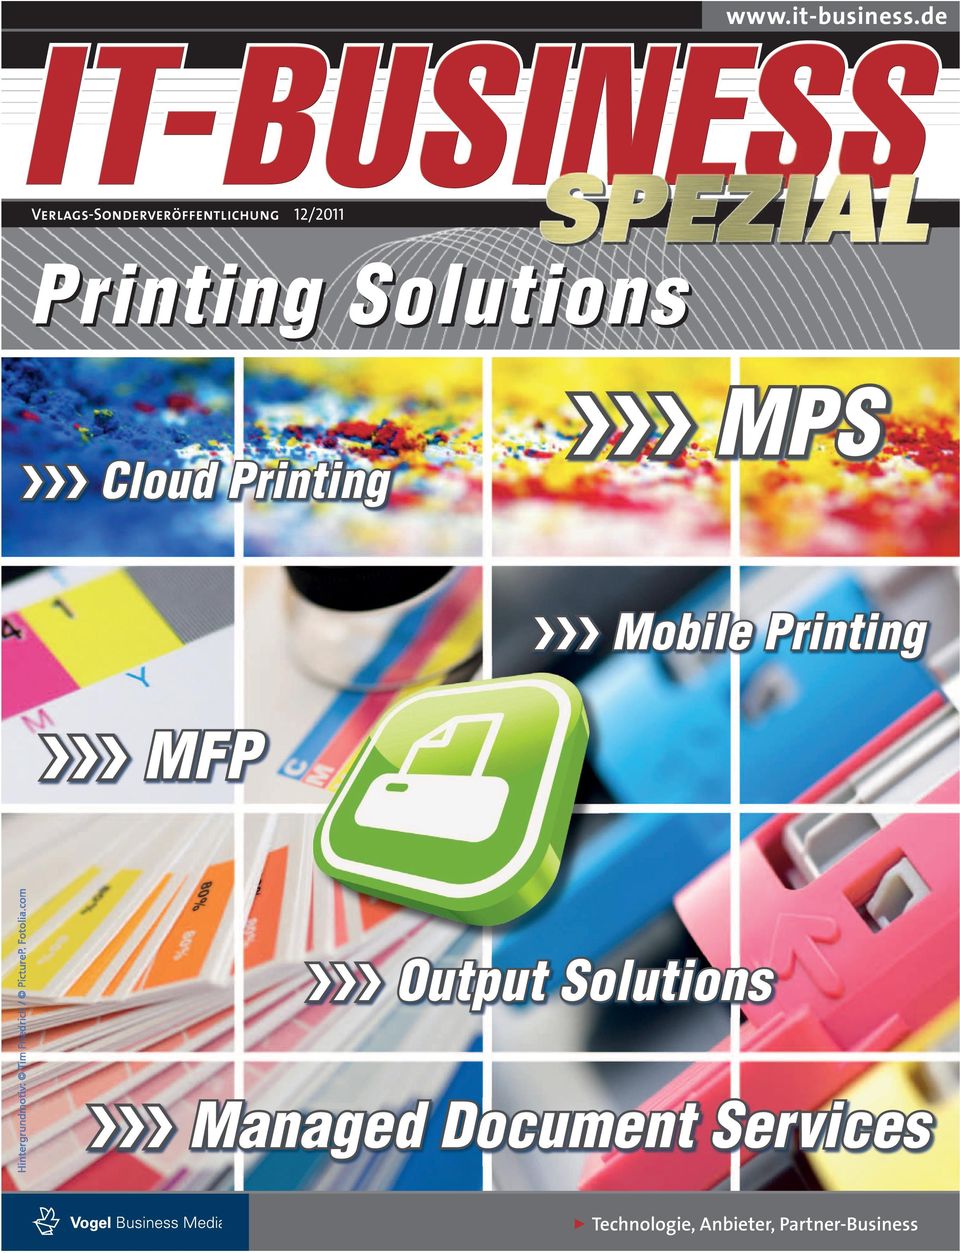 Solutions VVV Cloud Printing VVV MPS VVV Mobile